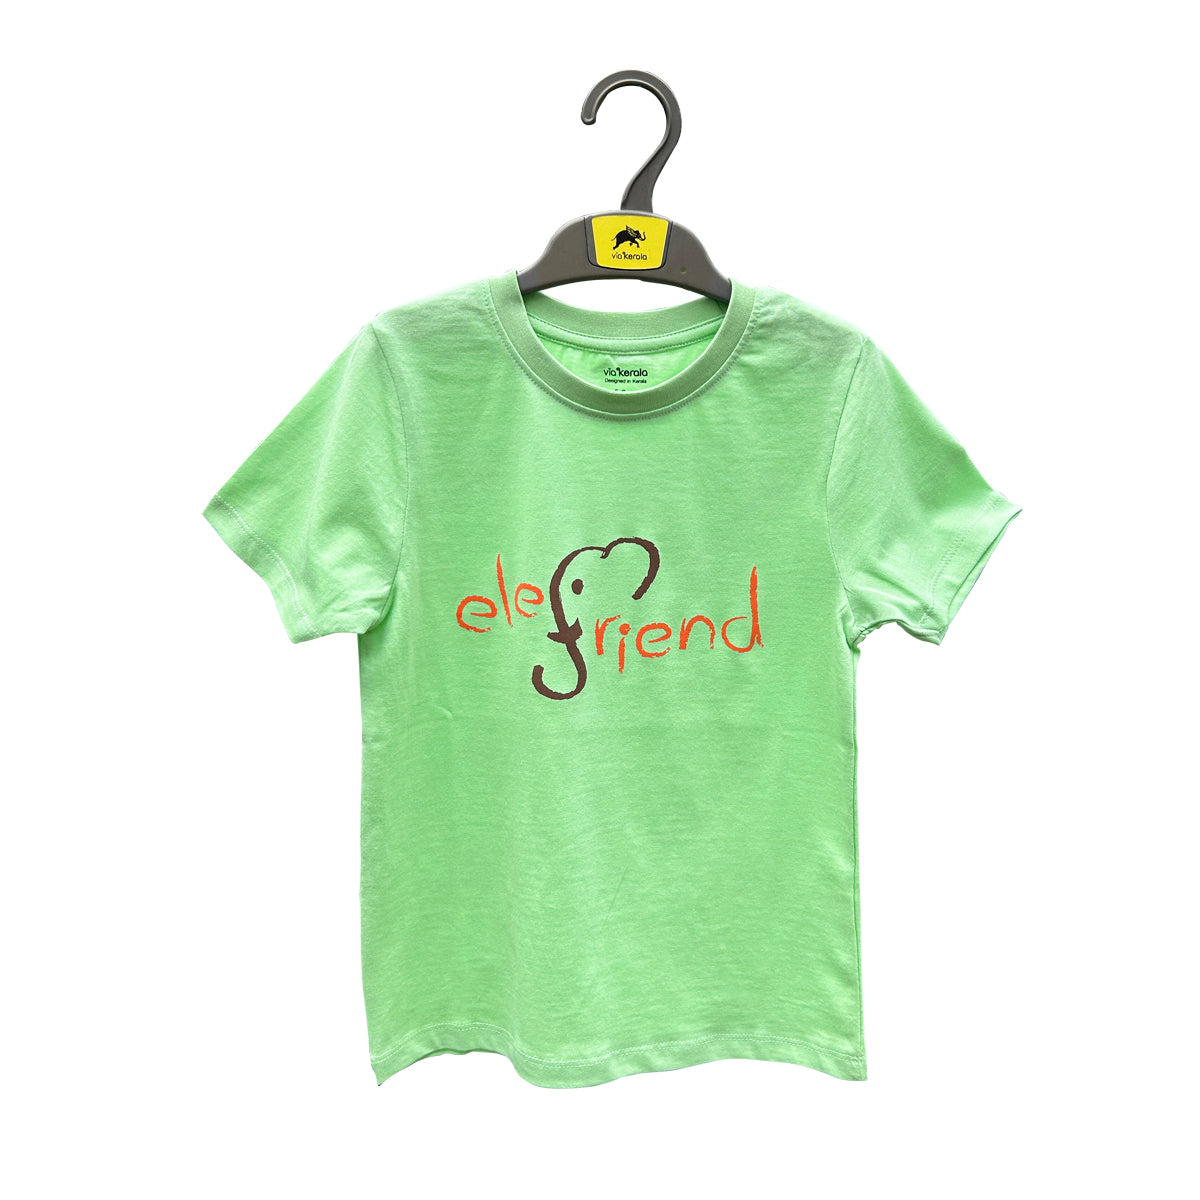 Elefriend — Kids T-shirt (Lilac & Light Green)